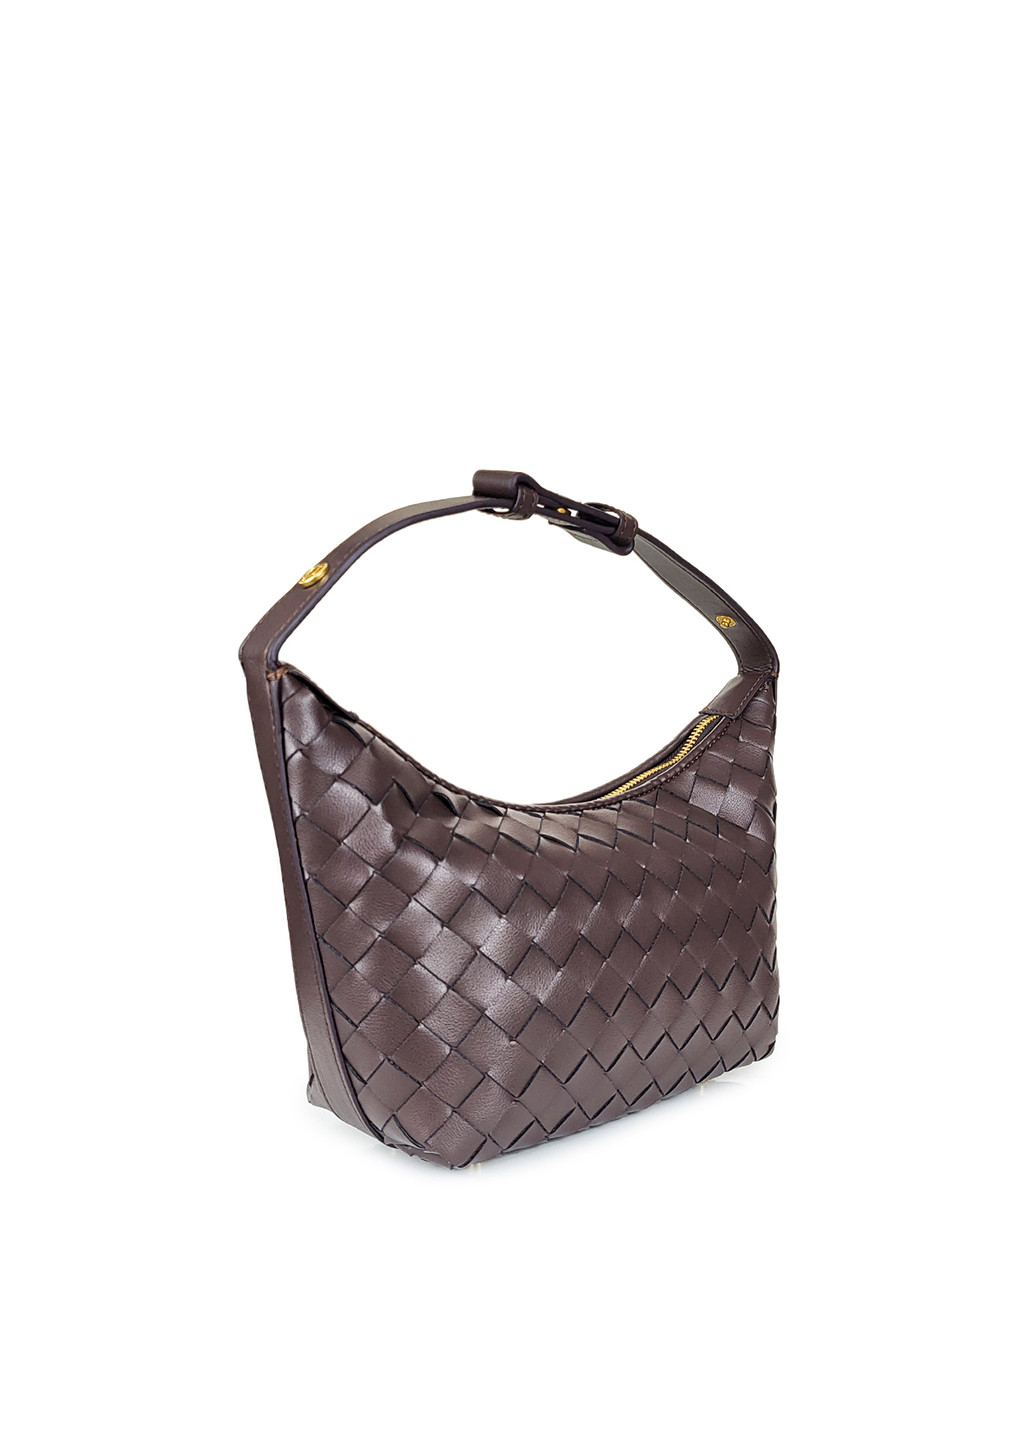 Шкіряна сумка хобо коричнева плетена, 9752 кор, Fashion (267404189)